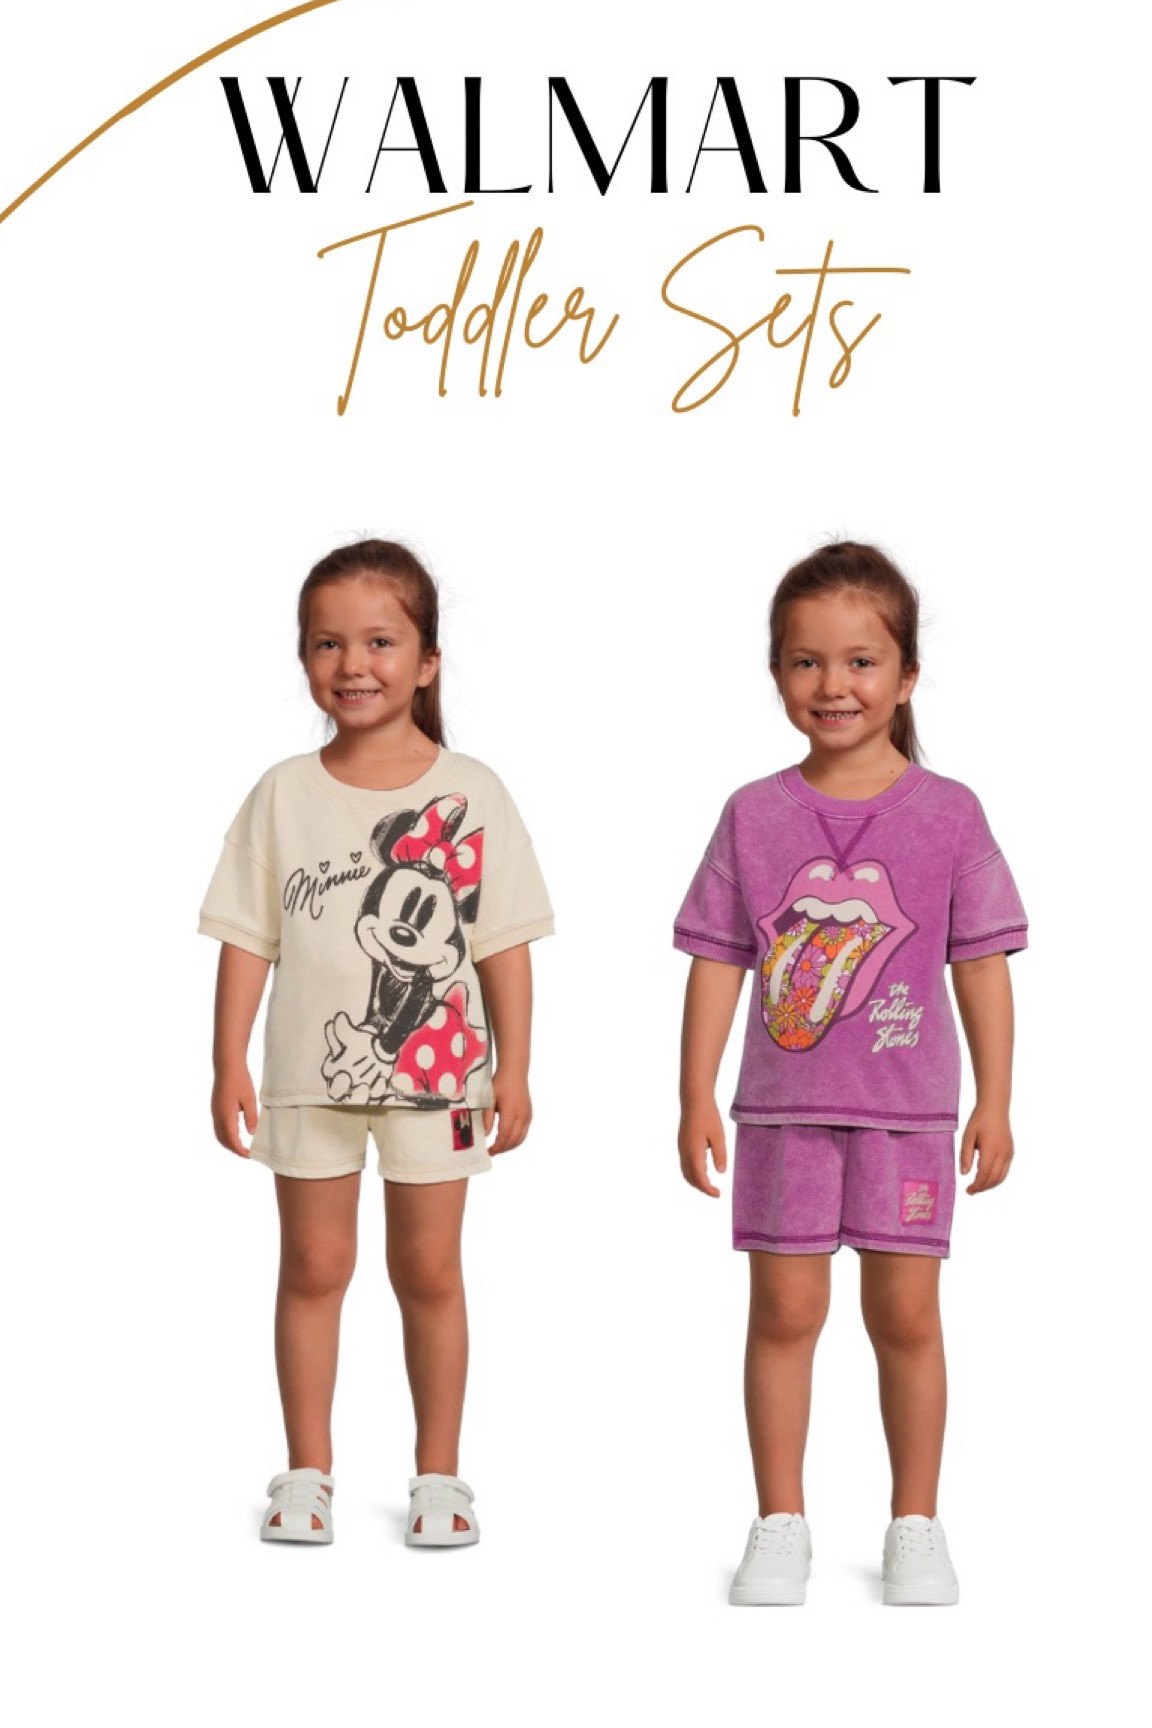 Louis Vuitton boy set, t-shirt, shorts, white/black Children s Sets  Clothing Mother Kids - AliExpress